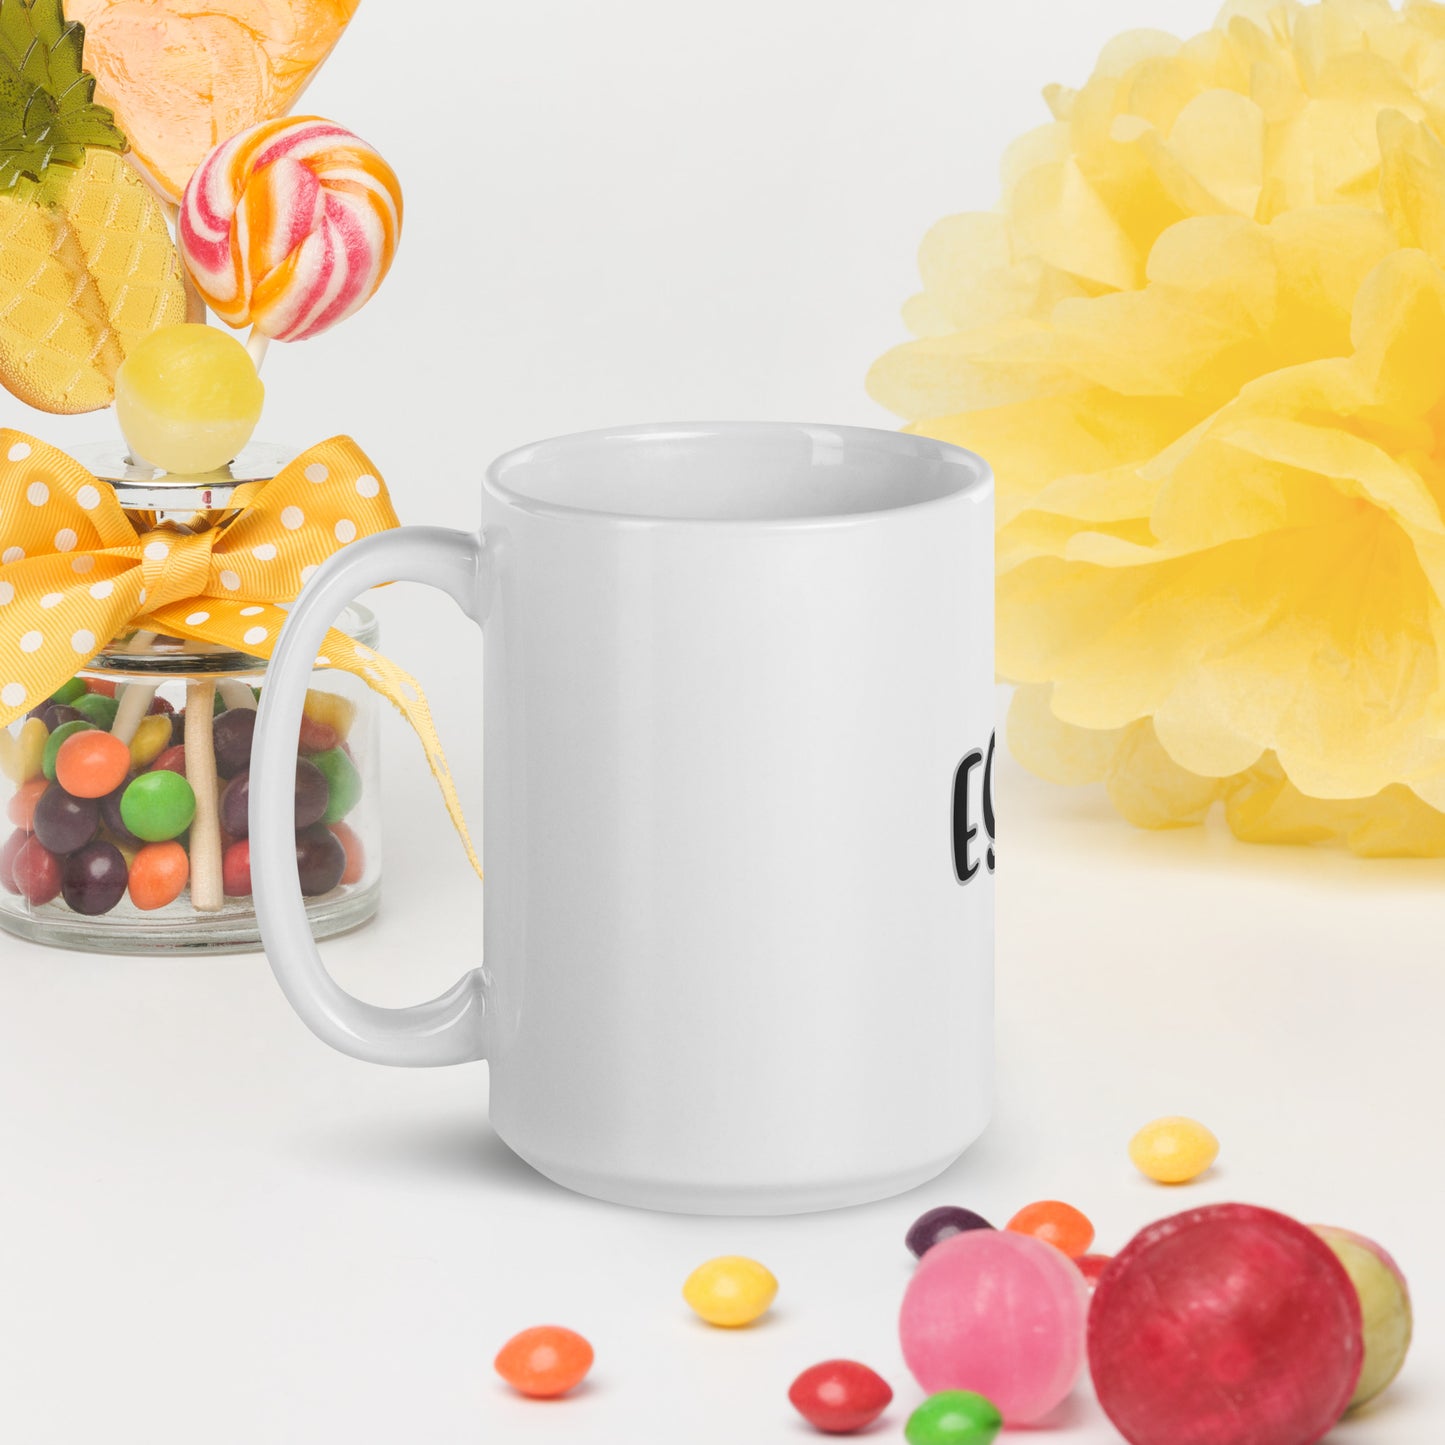 ESFJ White glossy mug